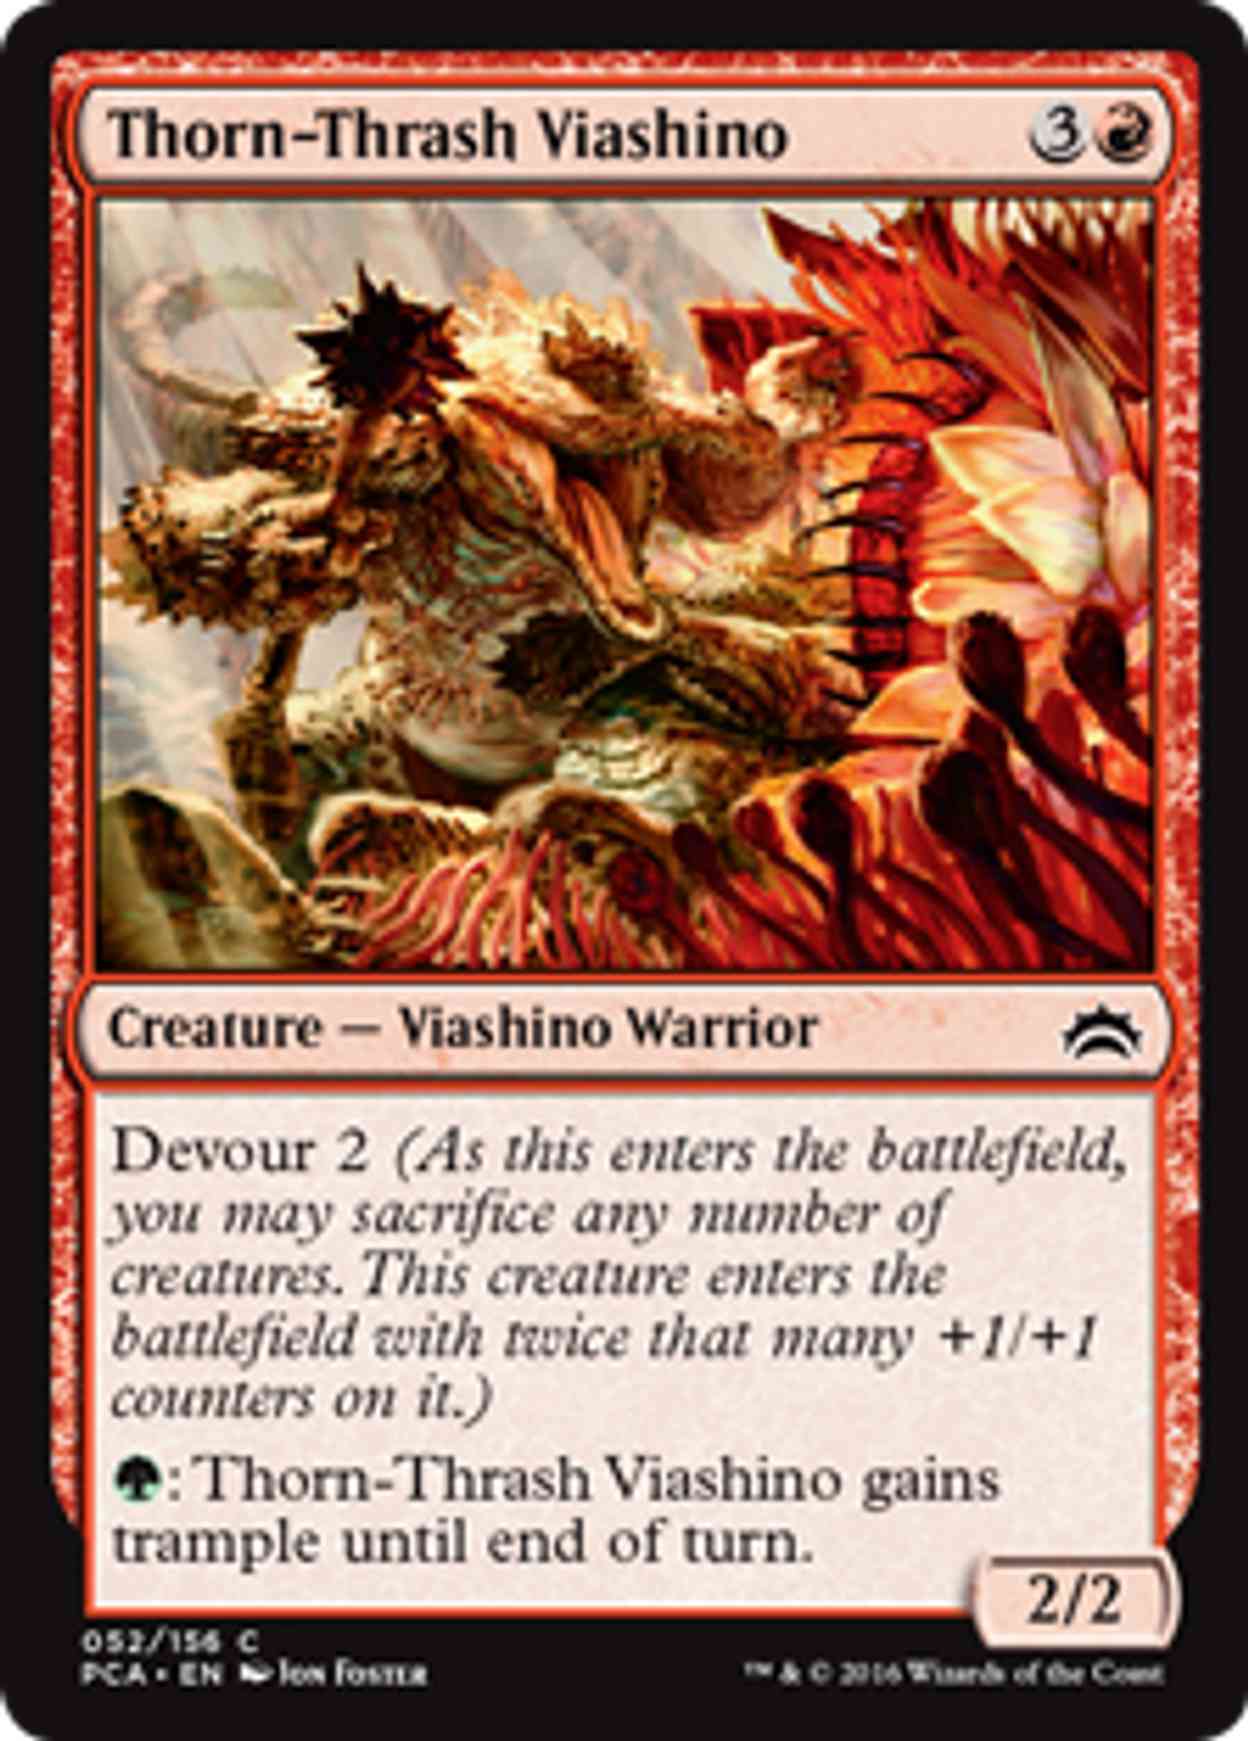 Thorn-Thrash Viashino magic card front